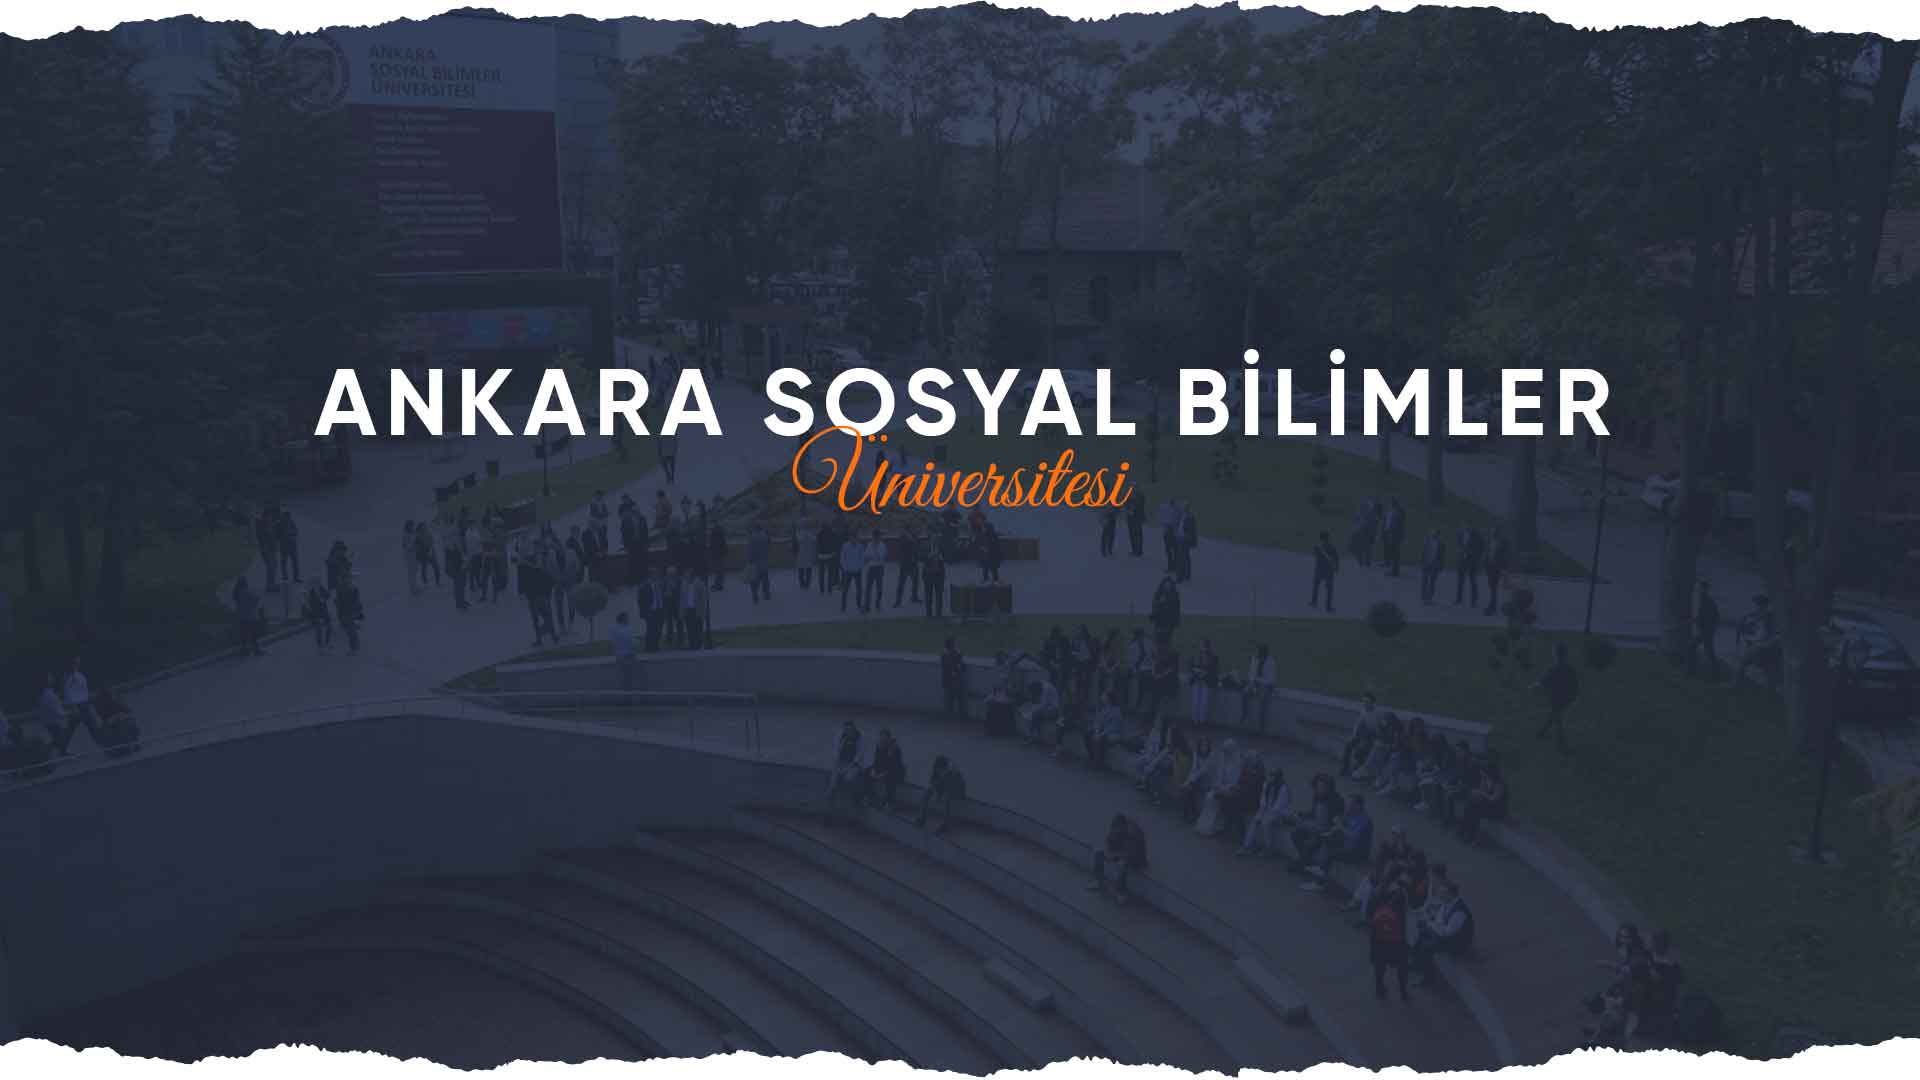 Ankara Bilim Üniversitesi